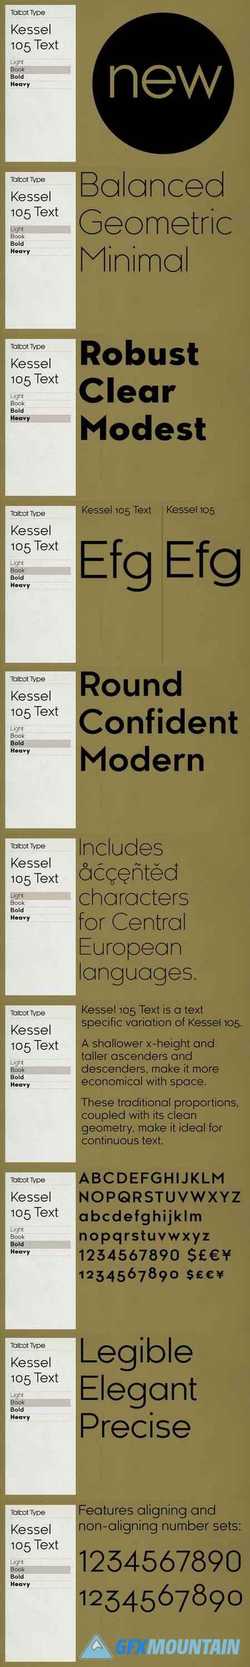 Kessel 105 Text Font Family